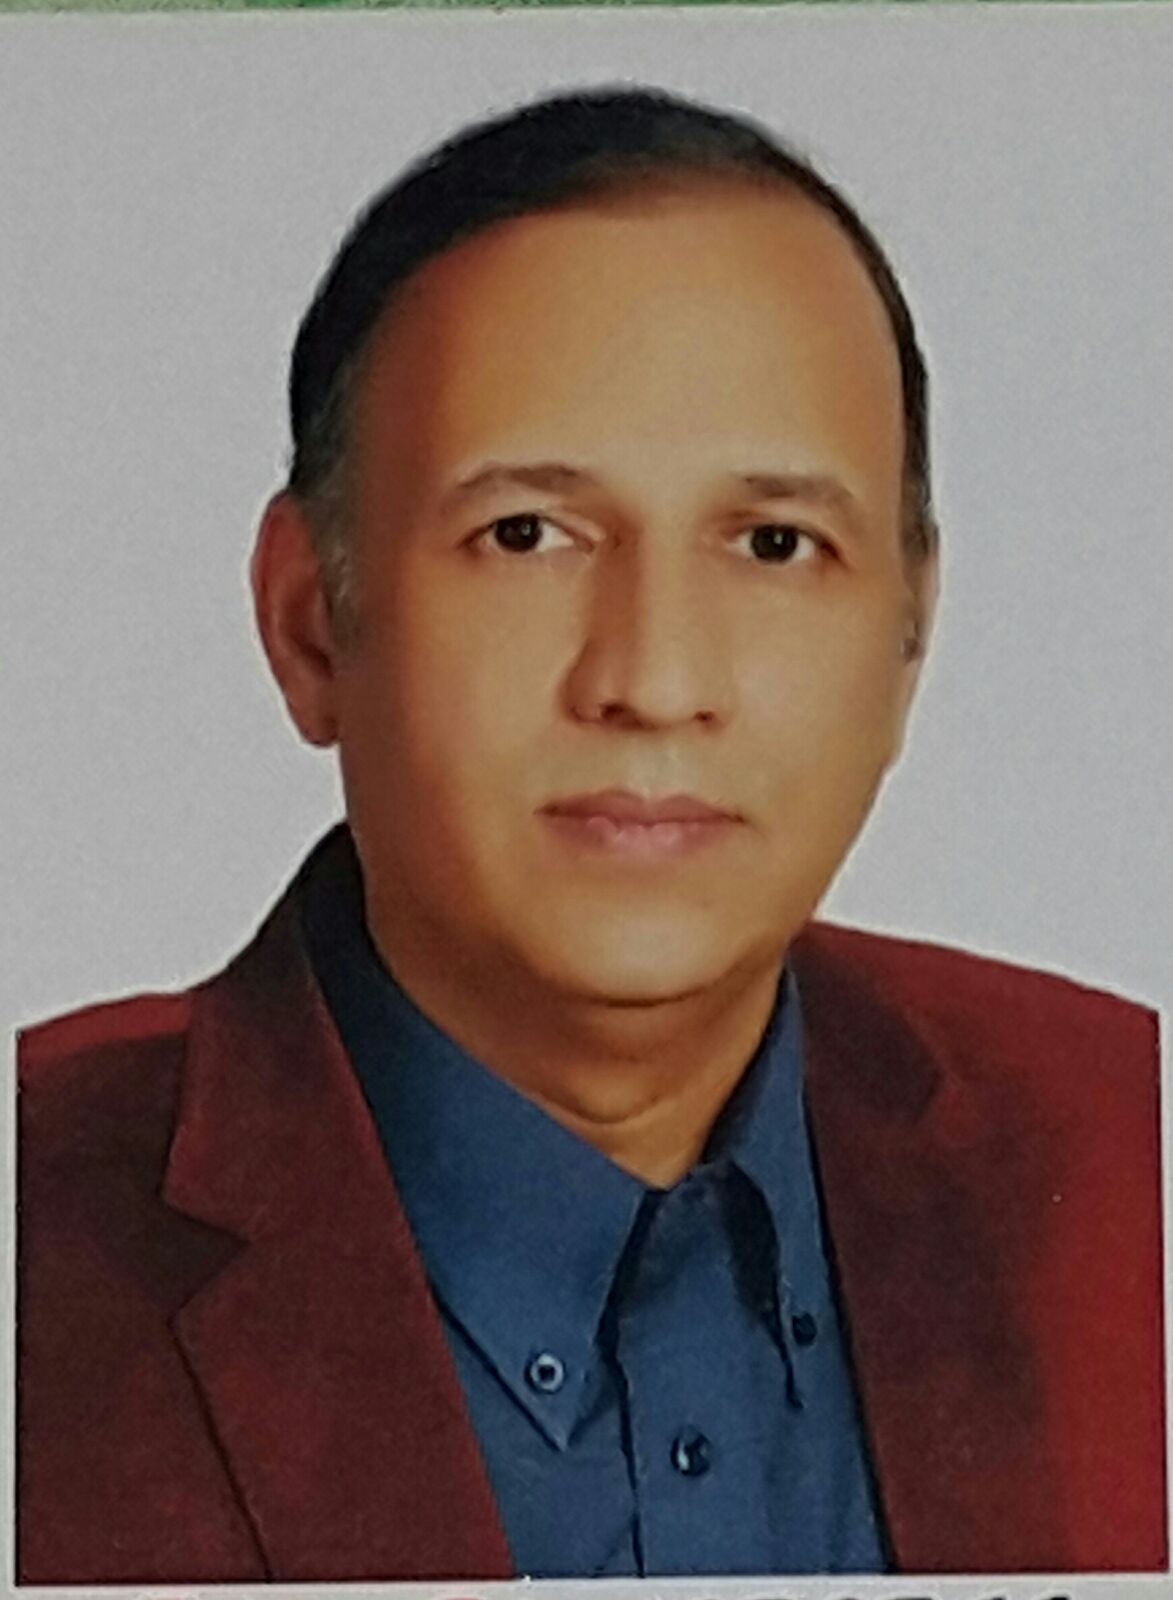 Amir Aynehband